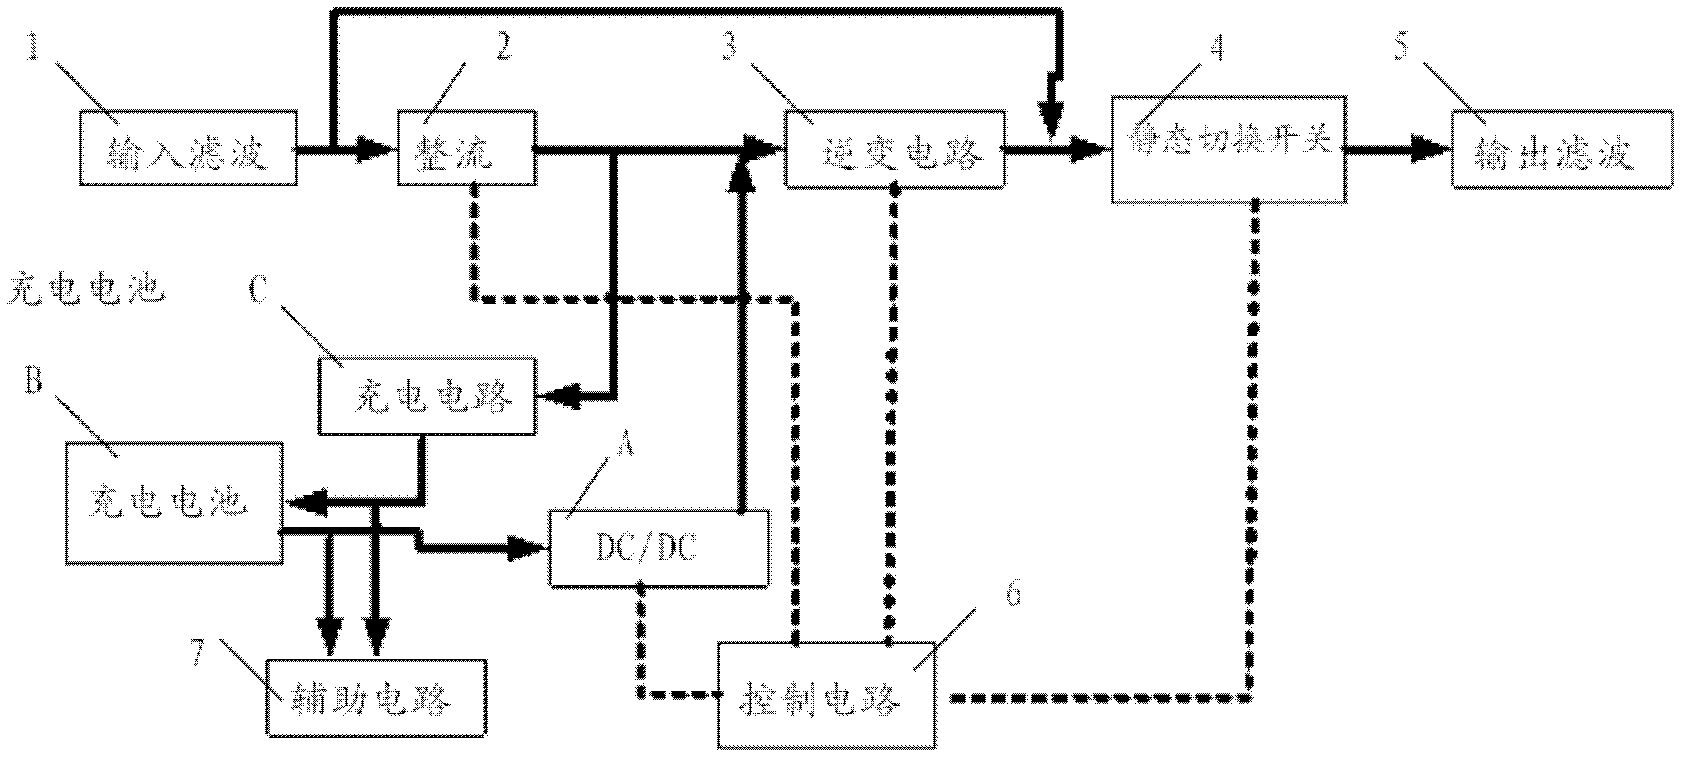 DC/DC circuit for UPS